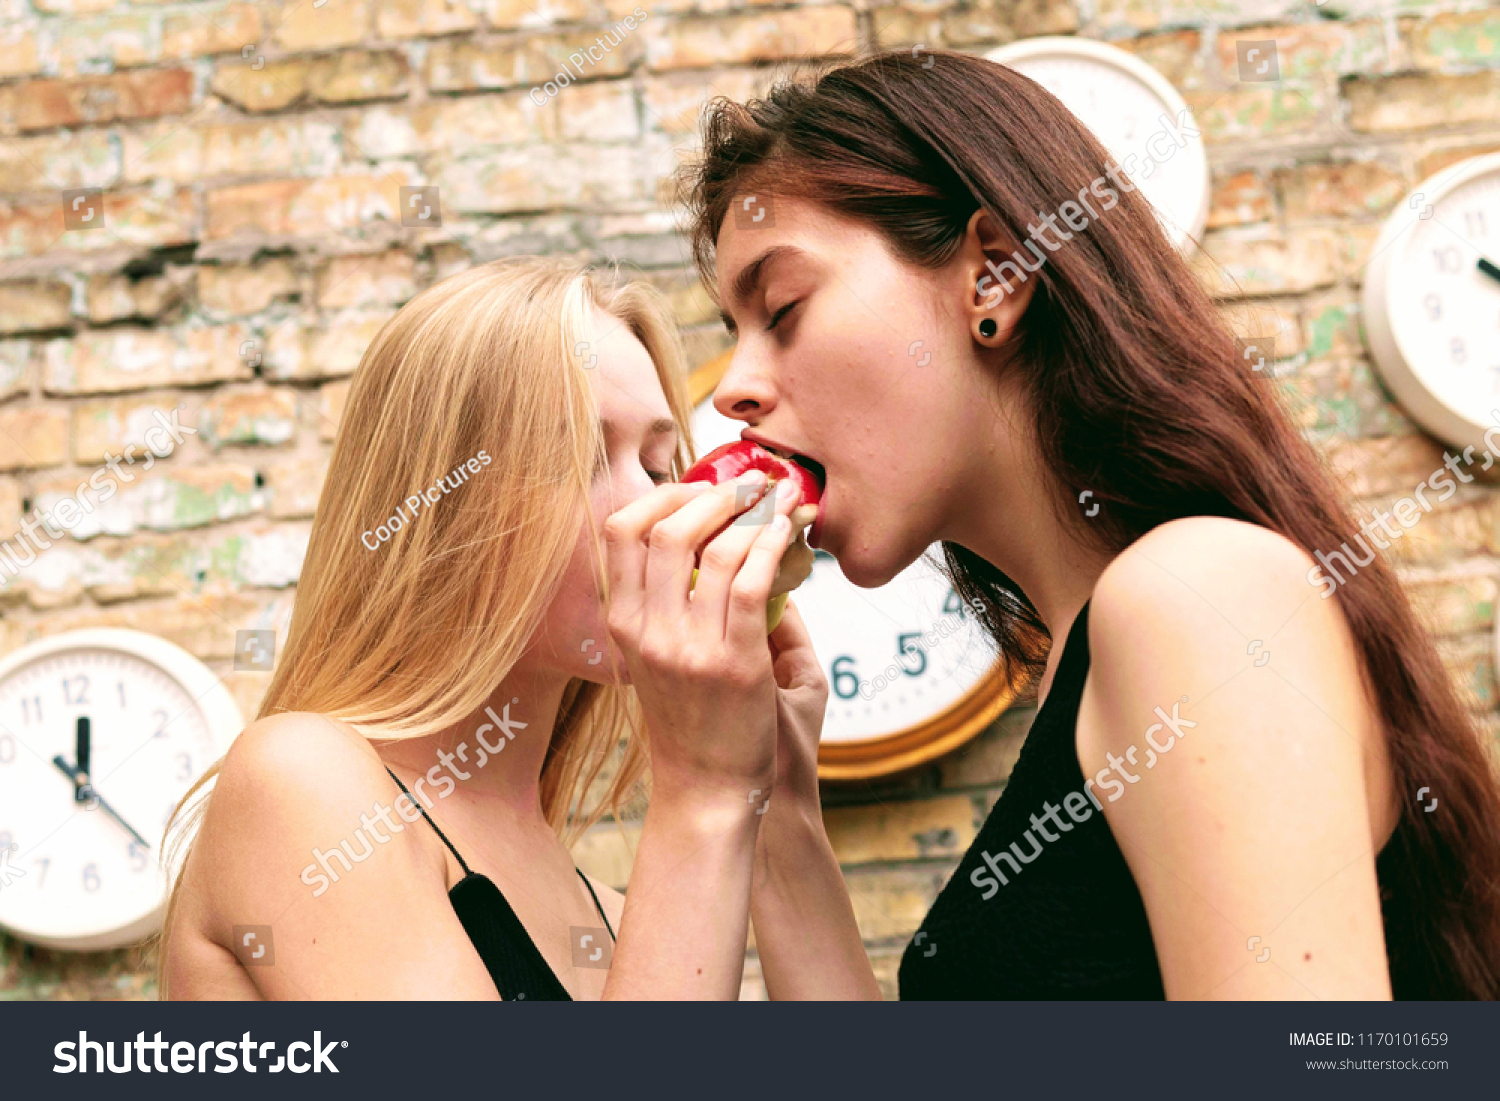 aaron bellew share lesbians seducing young women photos